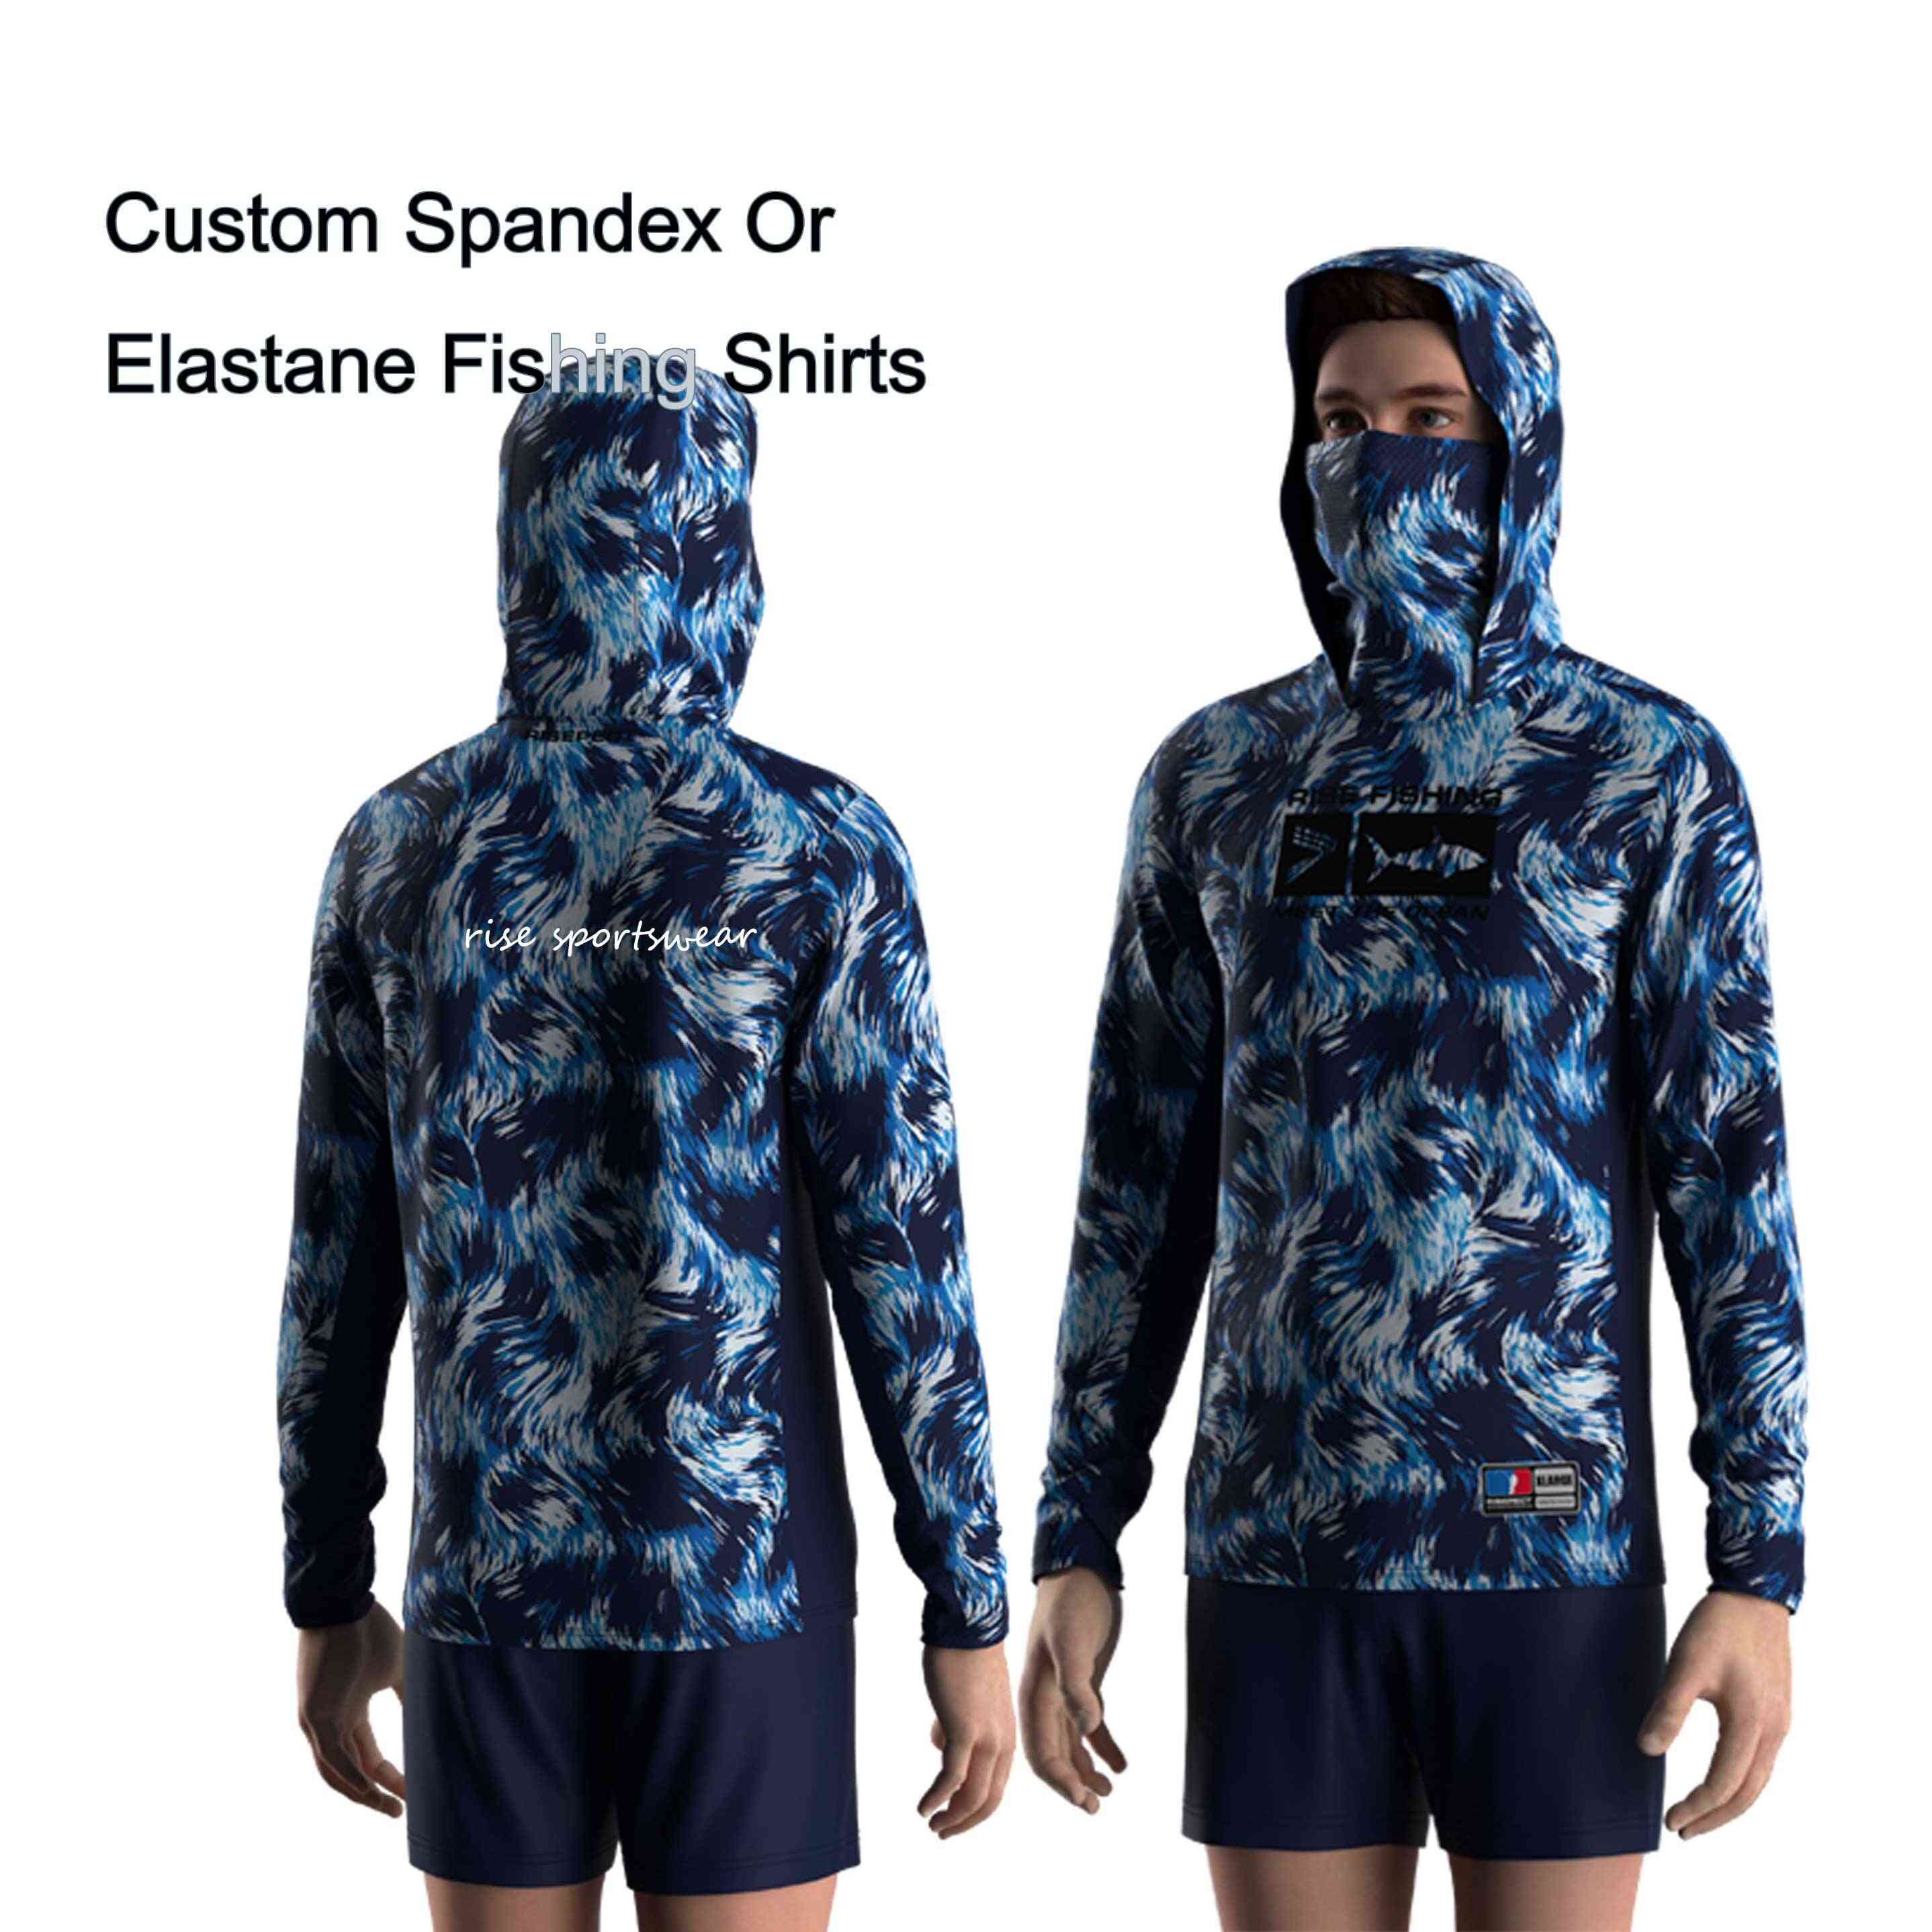 
                What about custom spandex or elastane fishing shirts?